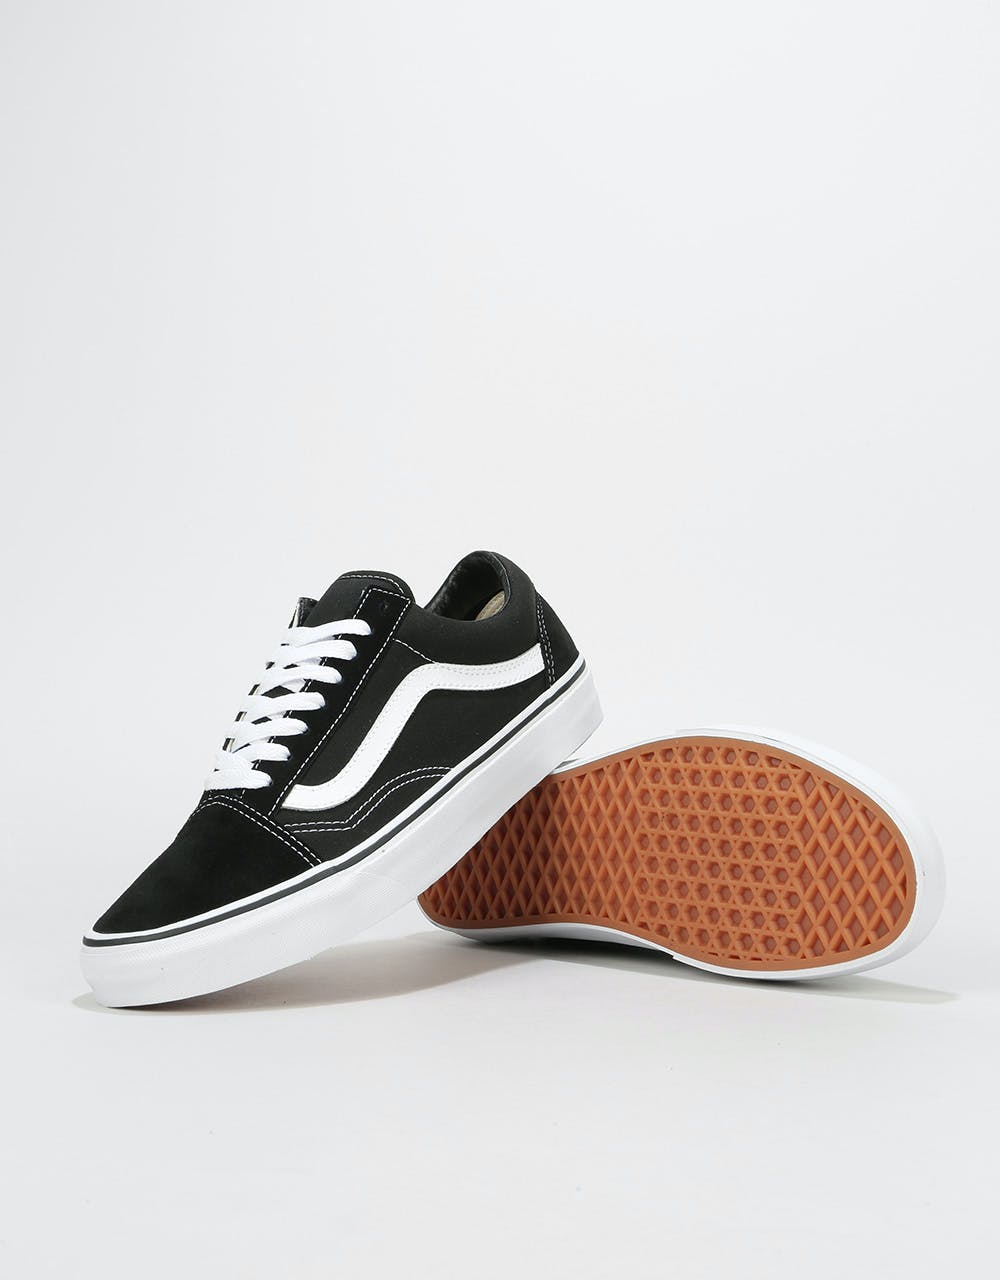 Vans Old Skool Skate Shoes - Black/White